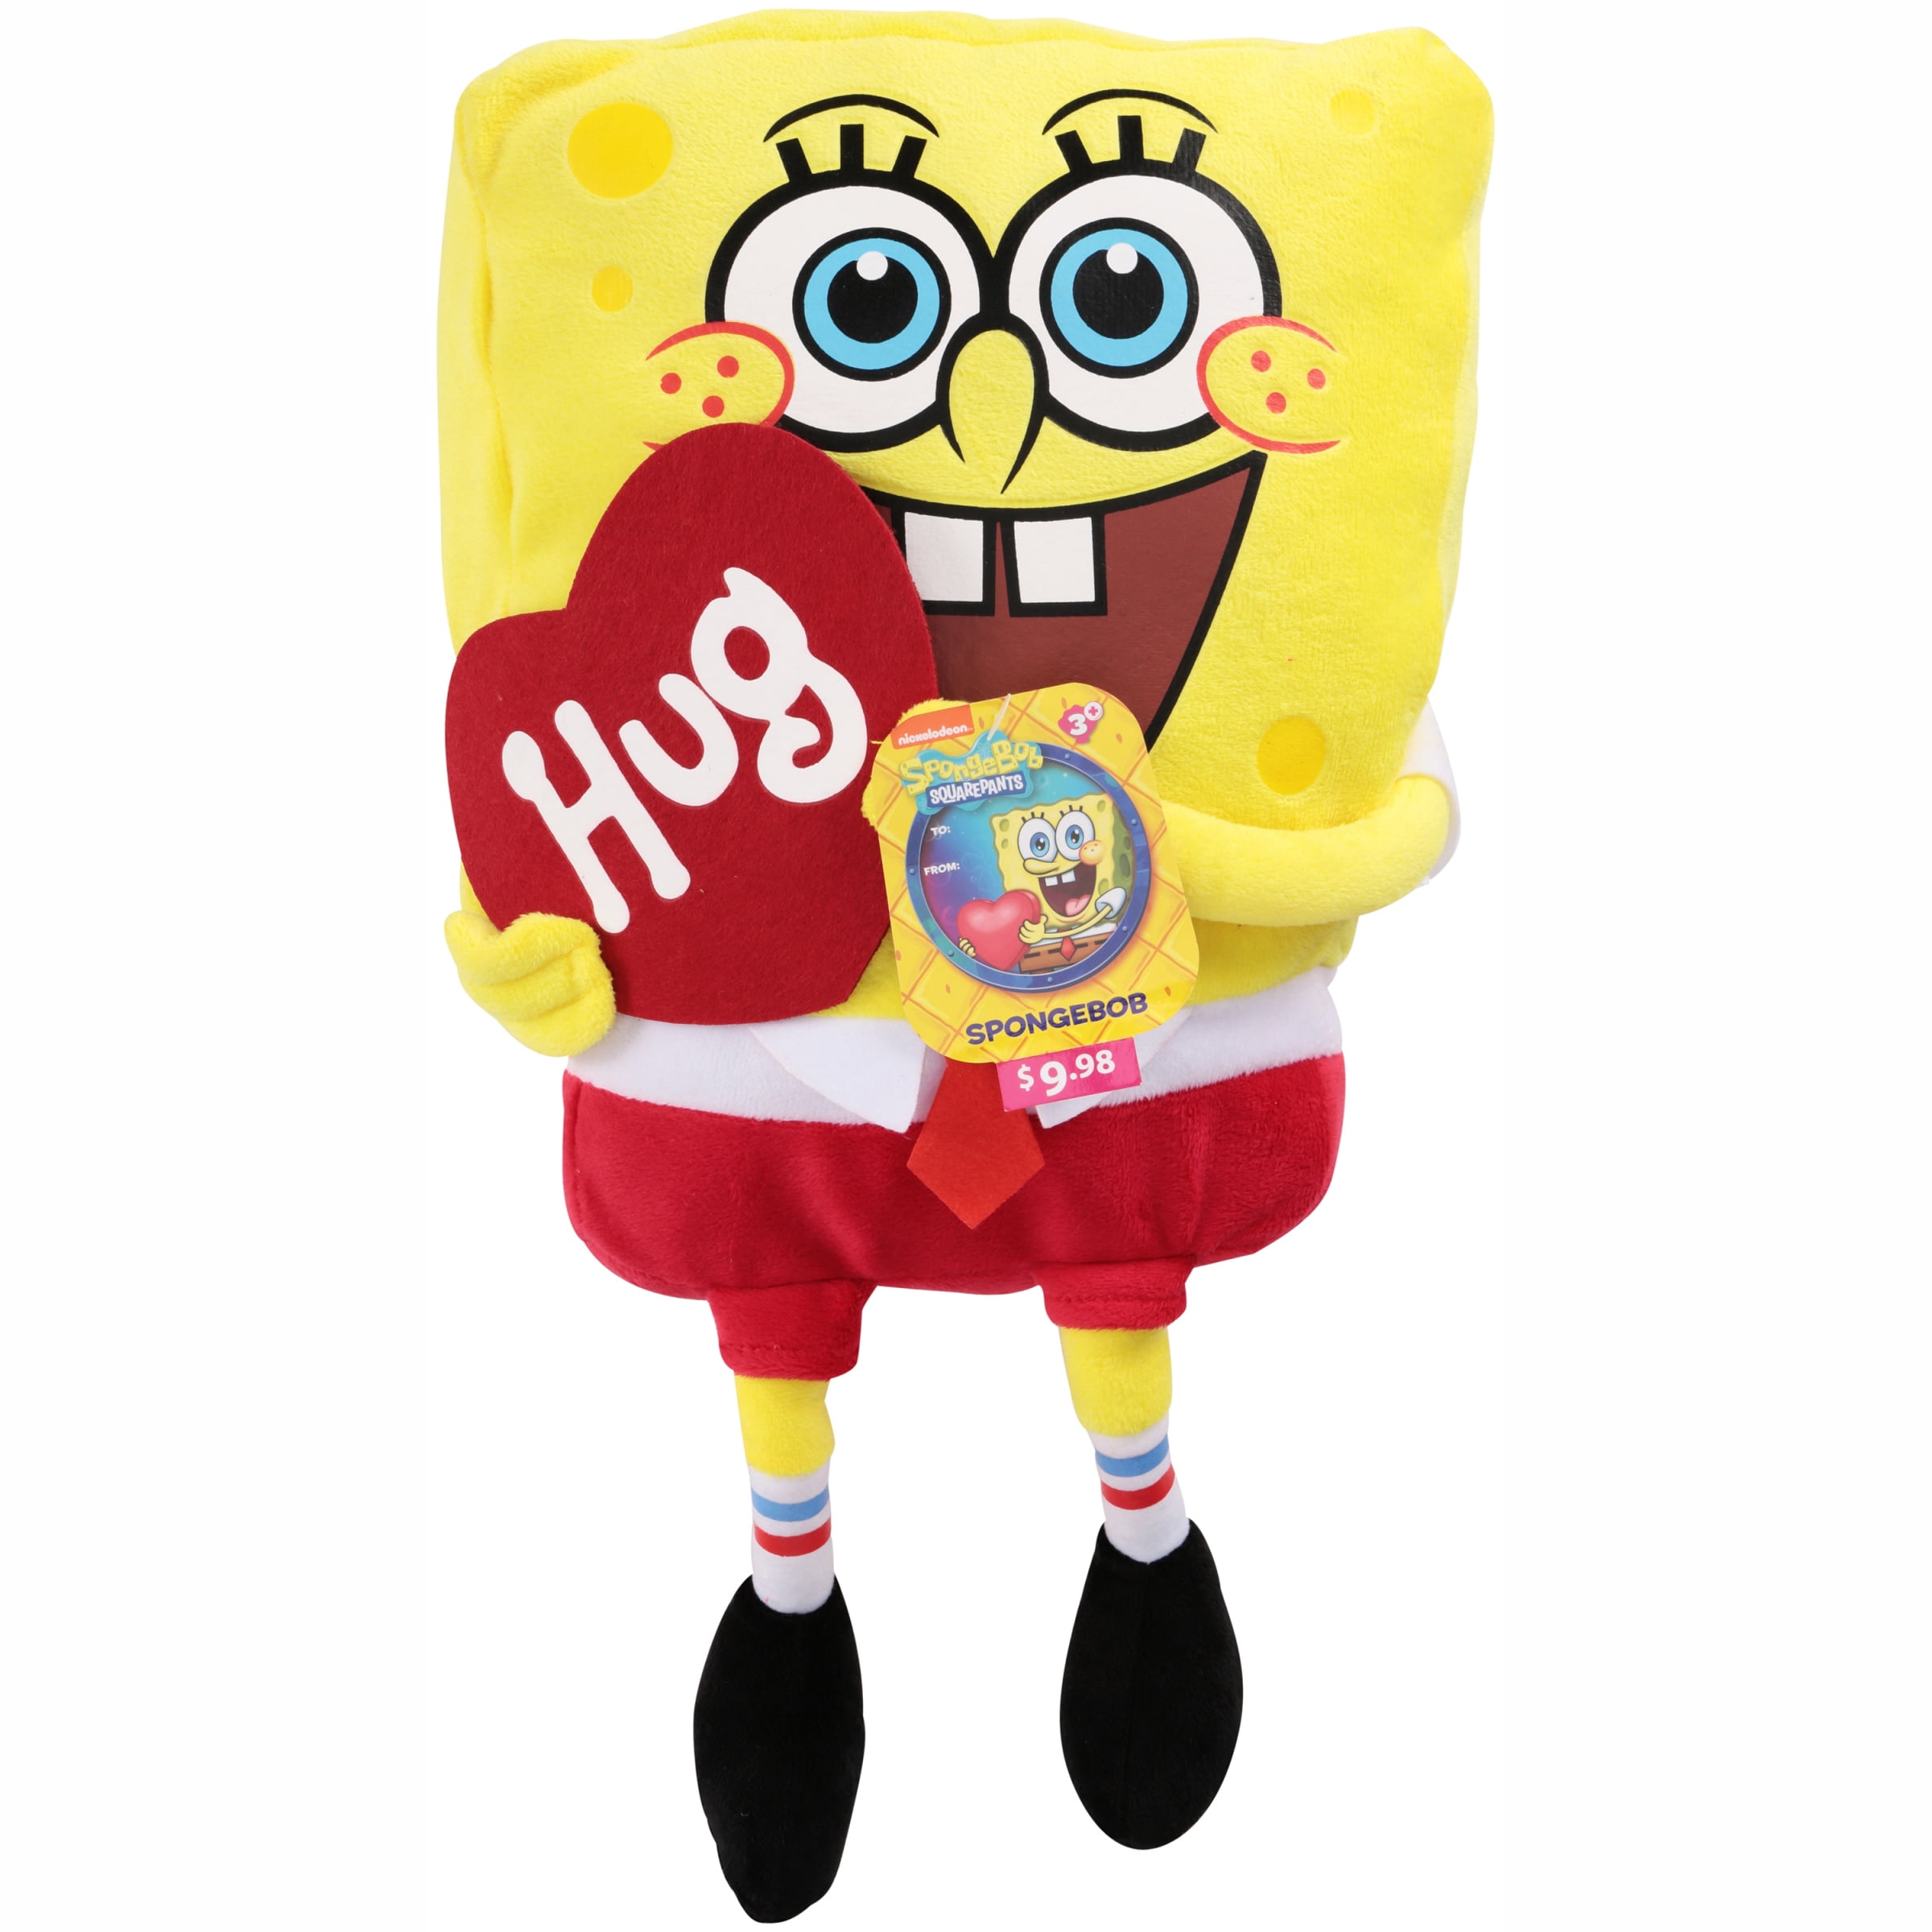 Nickelodeon Spongebob Squarepants Plush Doll Walmart